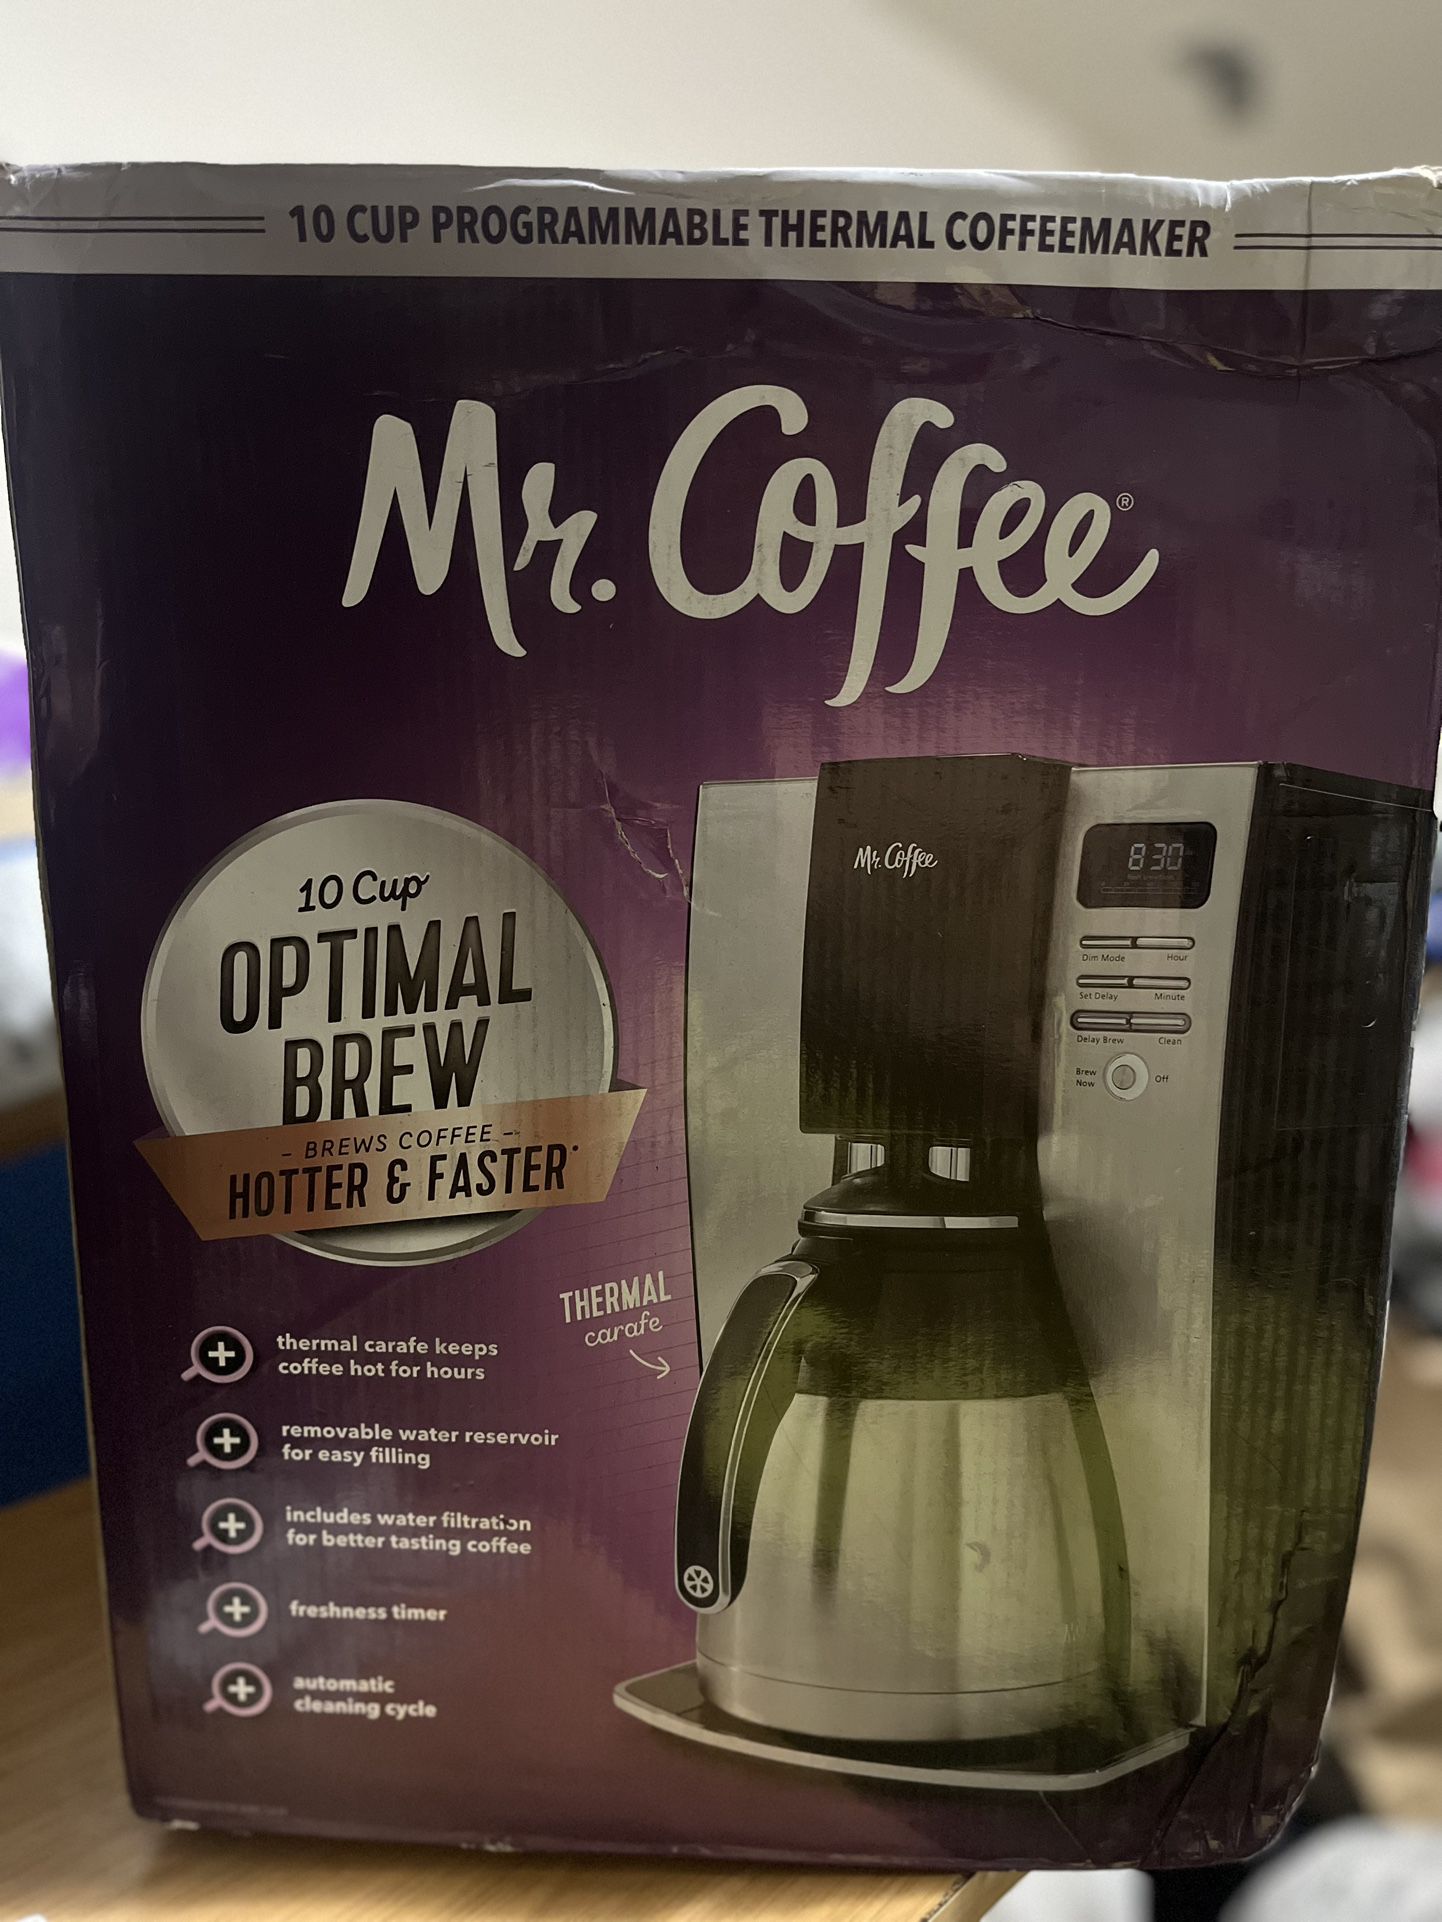 Mr. Coffee Optimal Brew